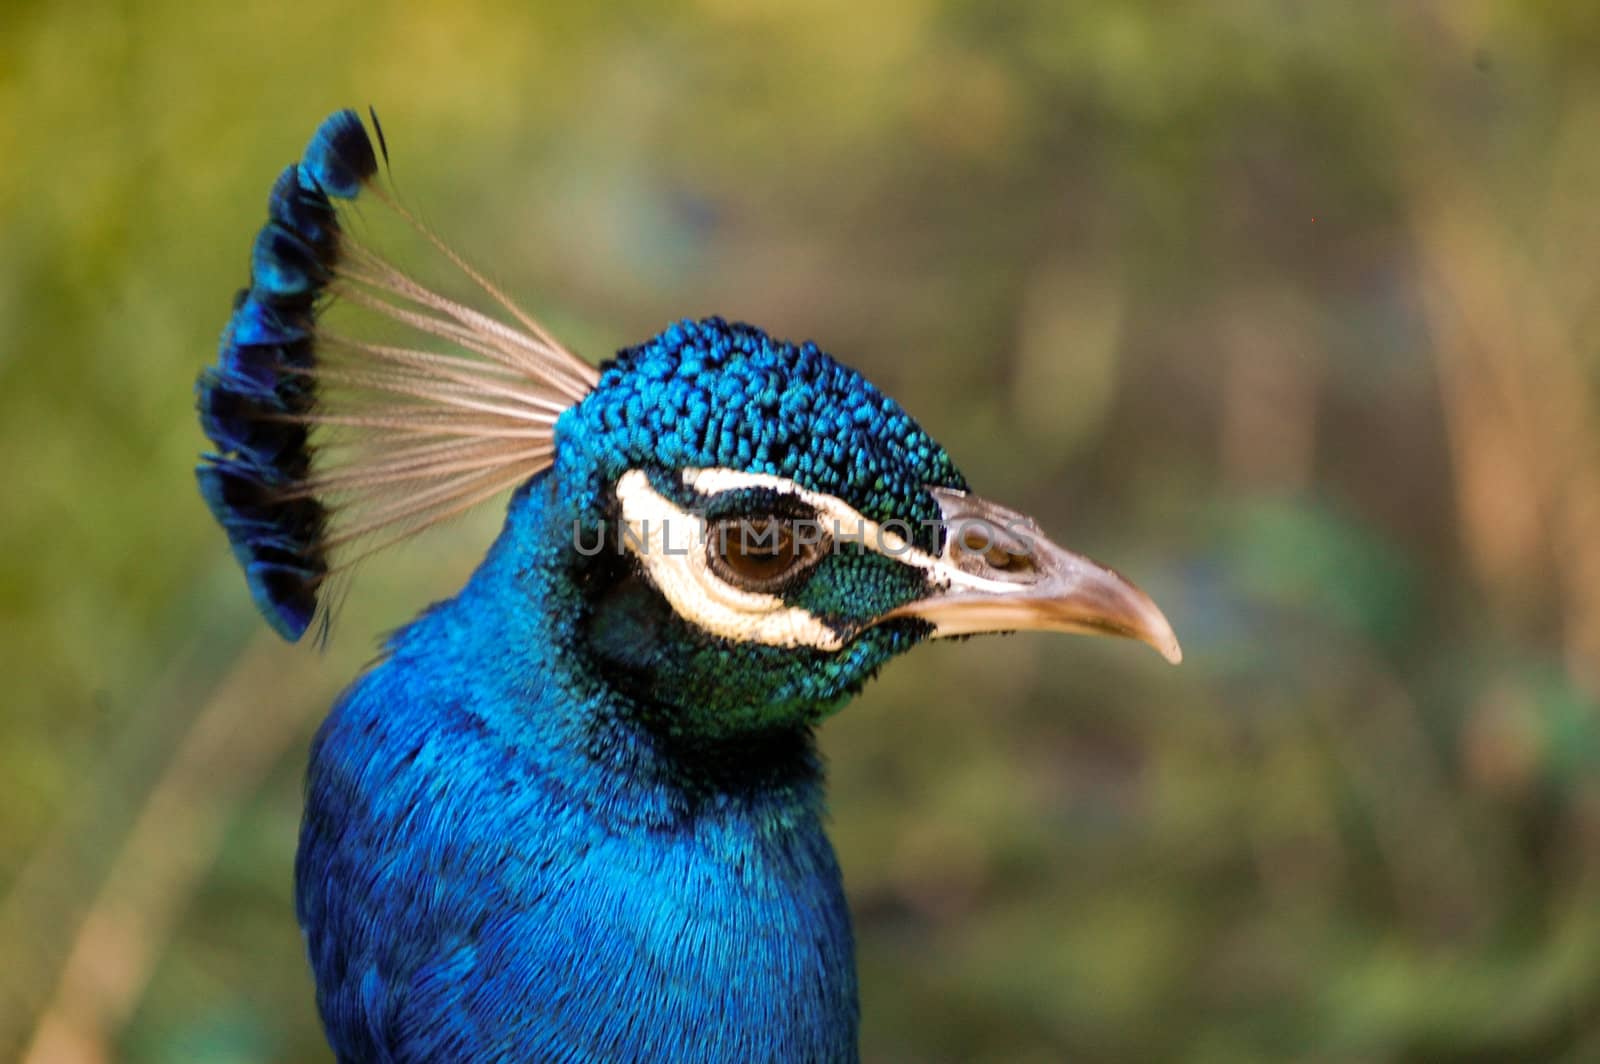 Mr. Peacock by RefocusPhoto